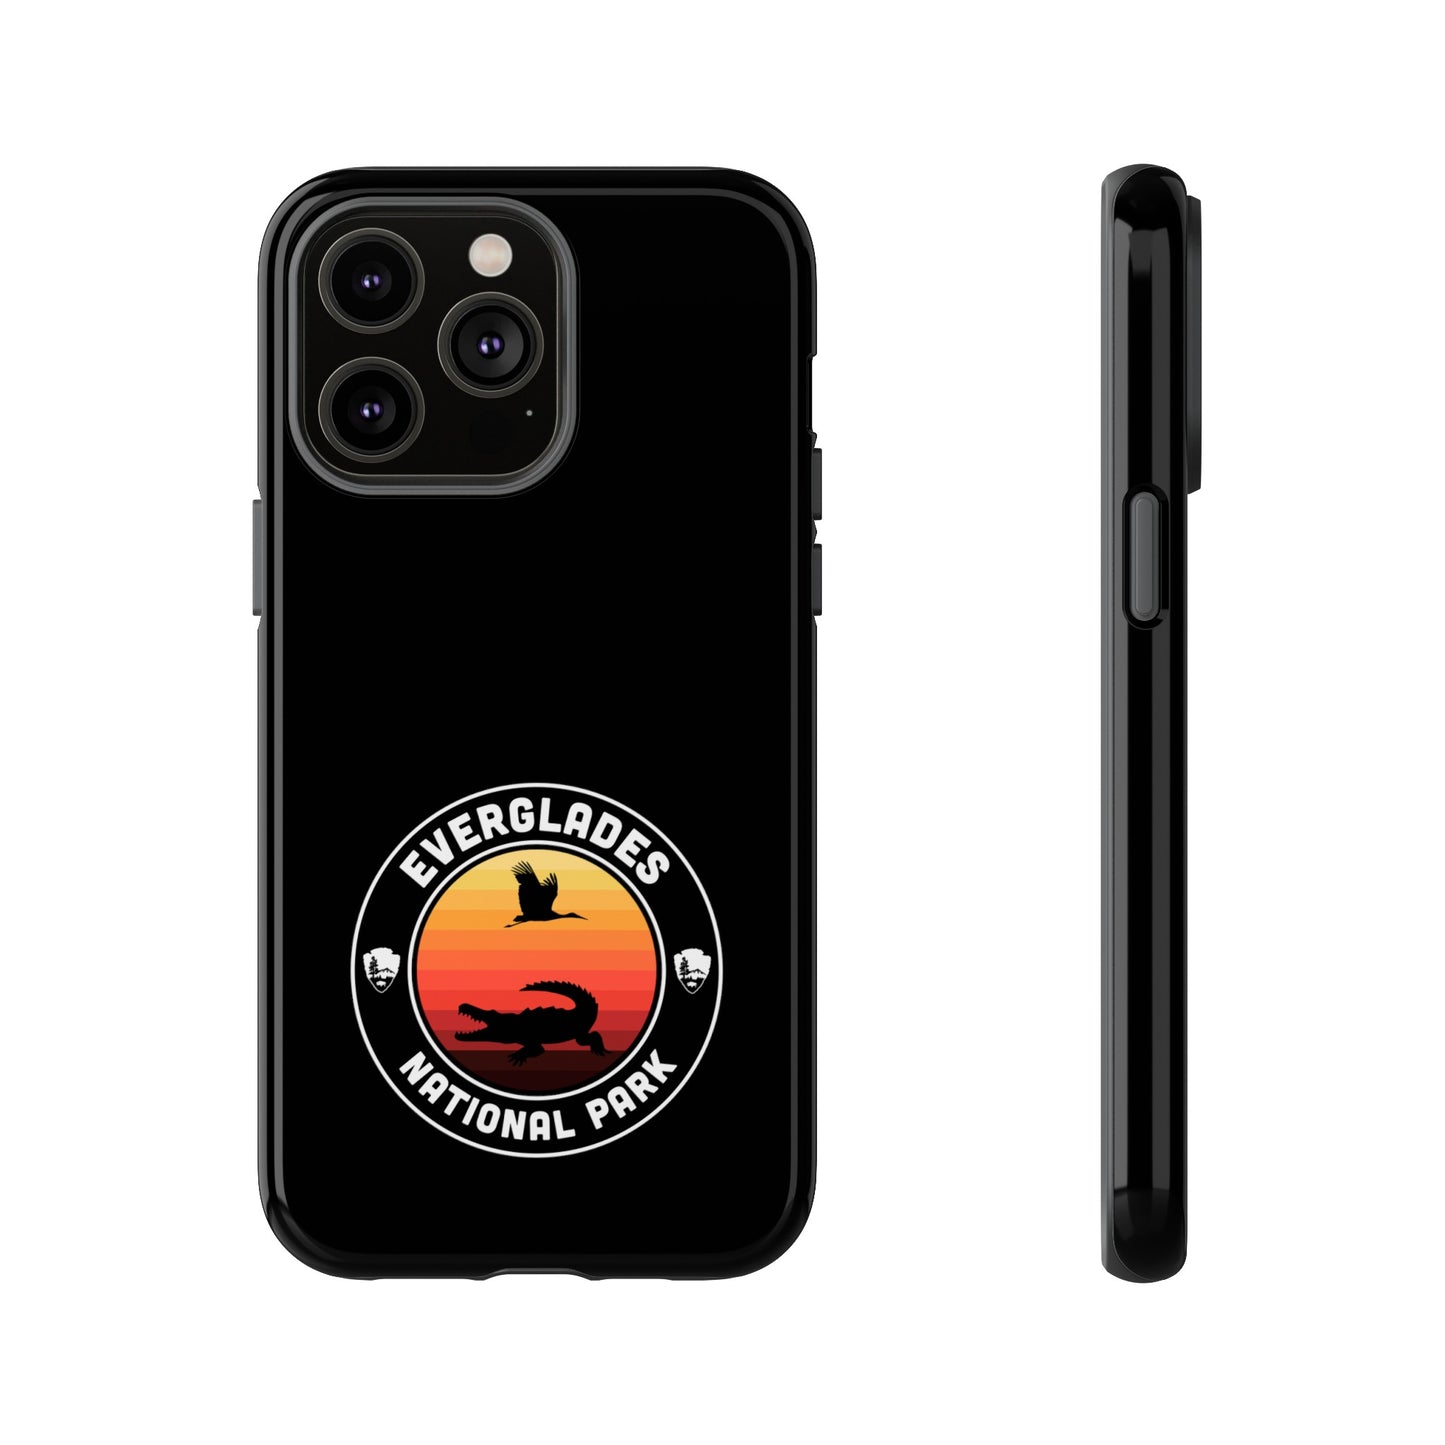 Everglades National Park Phone Case - Round Emblem Design